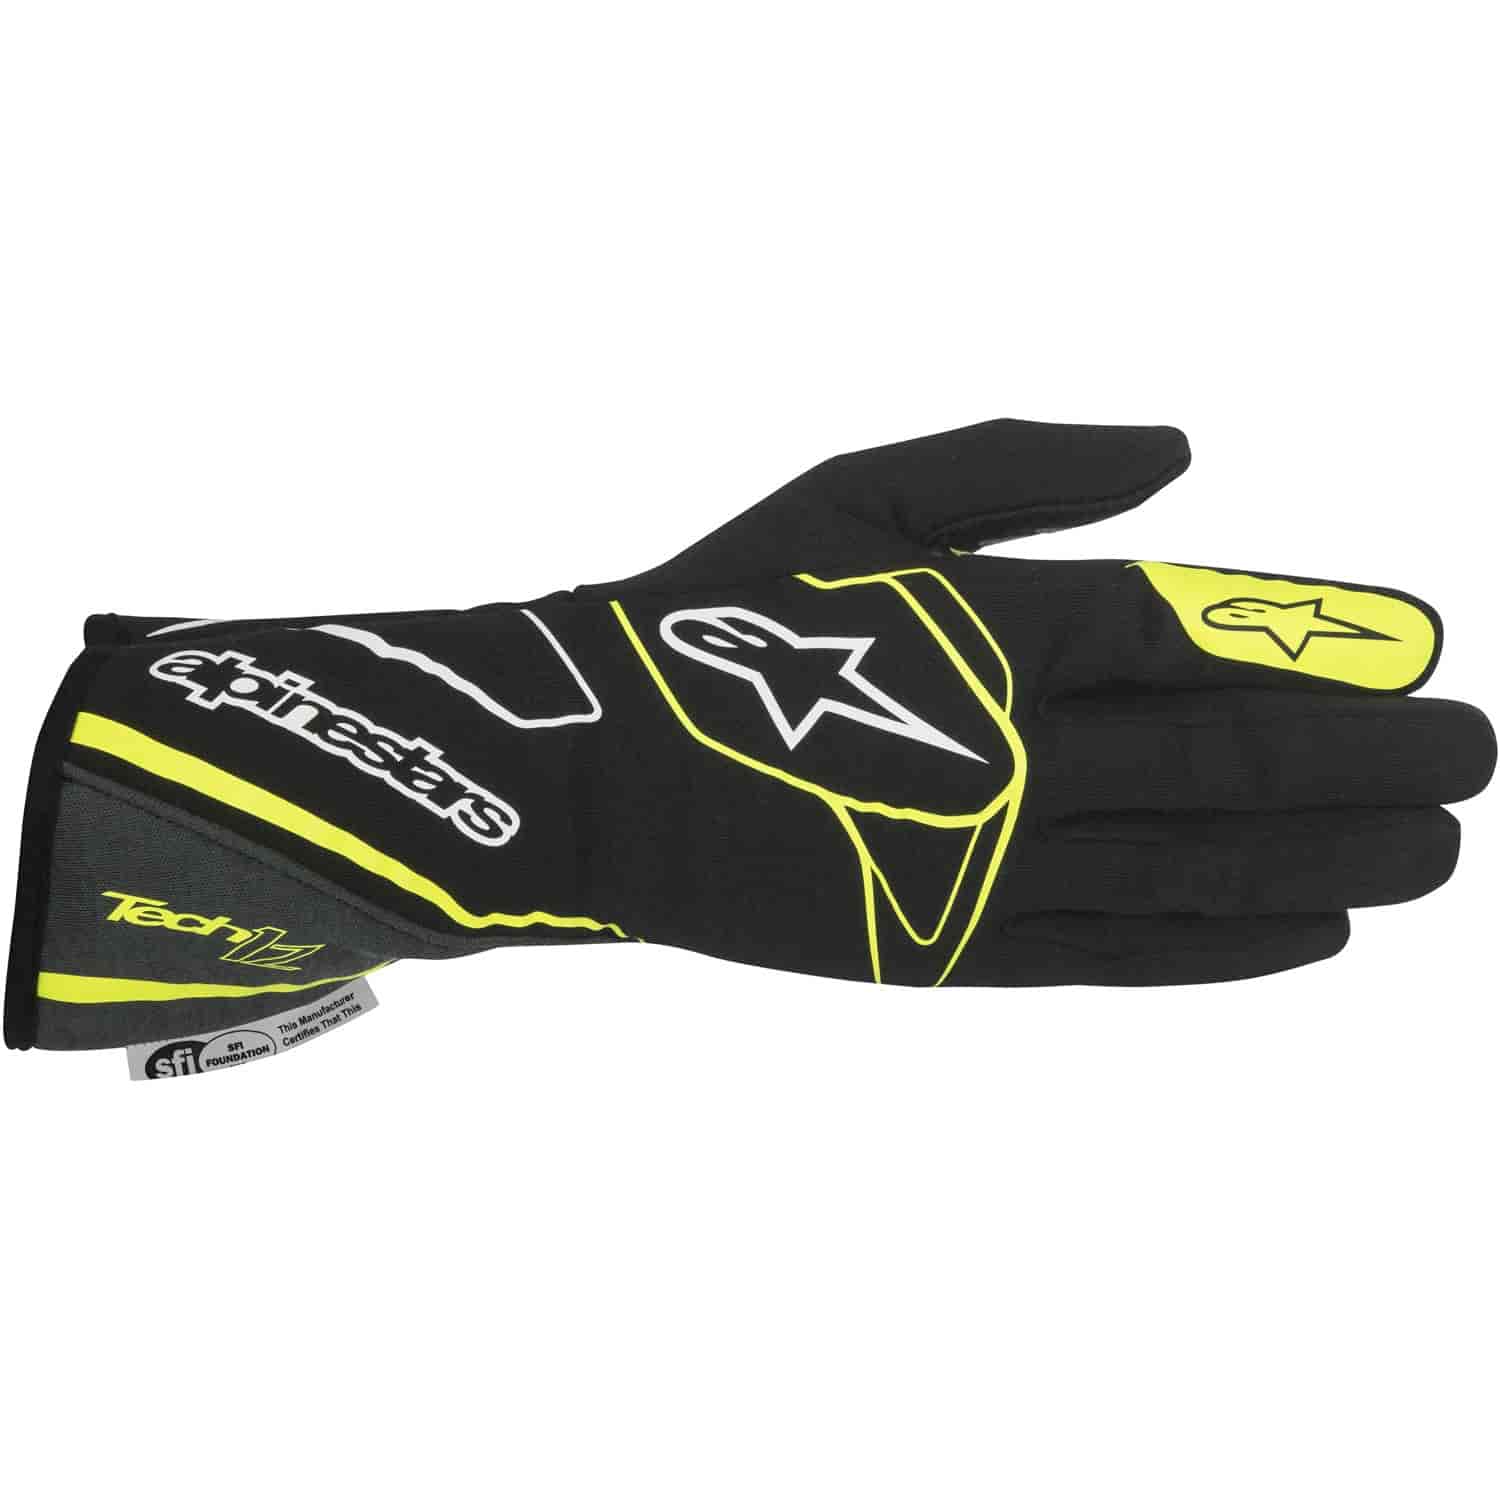 Tech 1-Z Glove Black/Anthracite/Yellow SFI 3.3/5